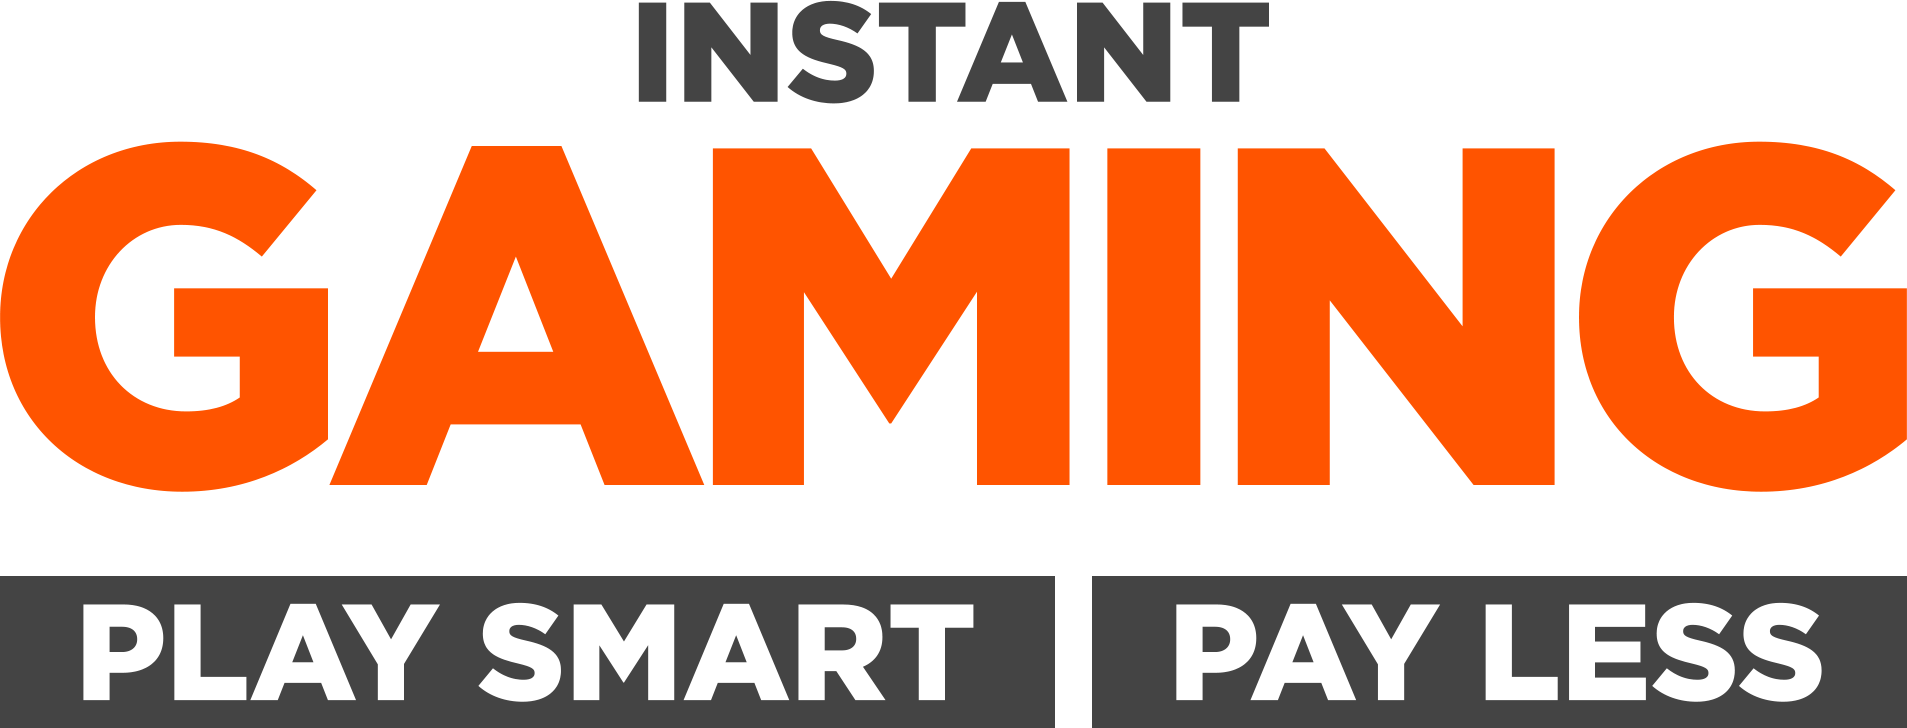 Instant-Gamin - Logo Grey